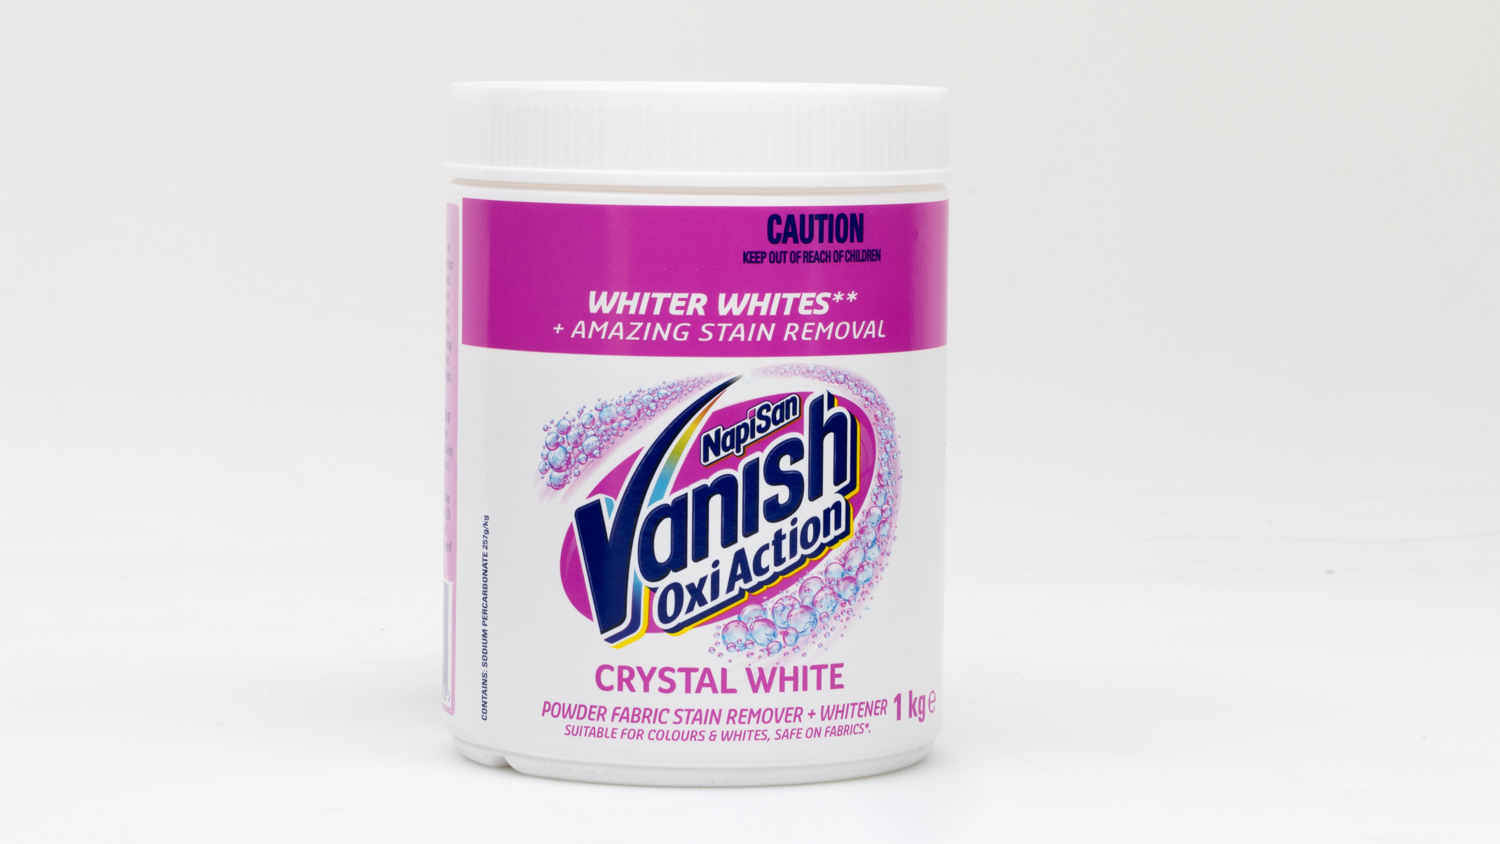 Vanish NapiSan Oxi Action Crystal White Powder Fabric Stain Remover + Whitener carousel image